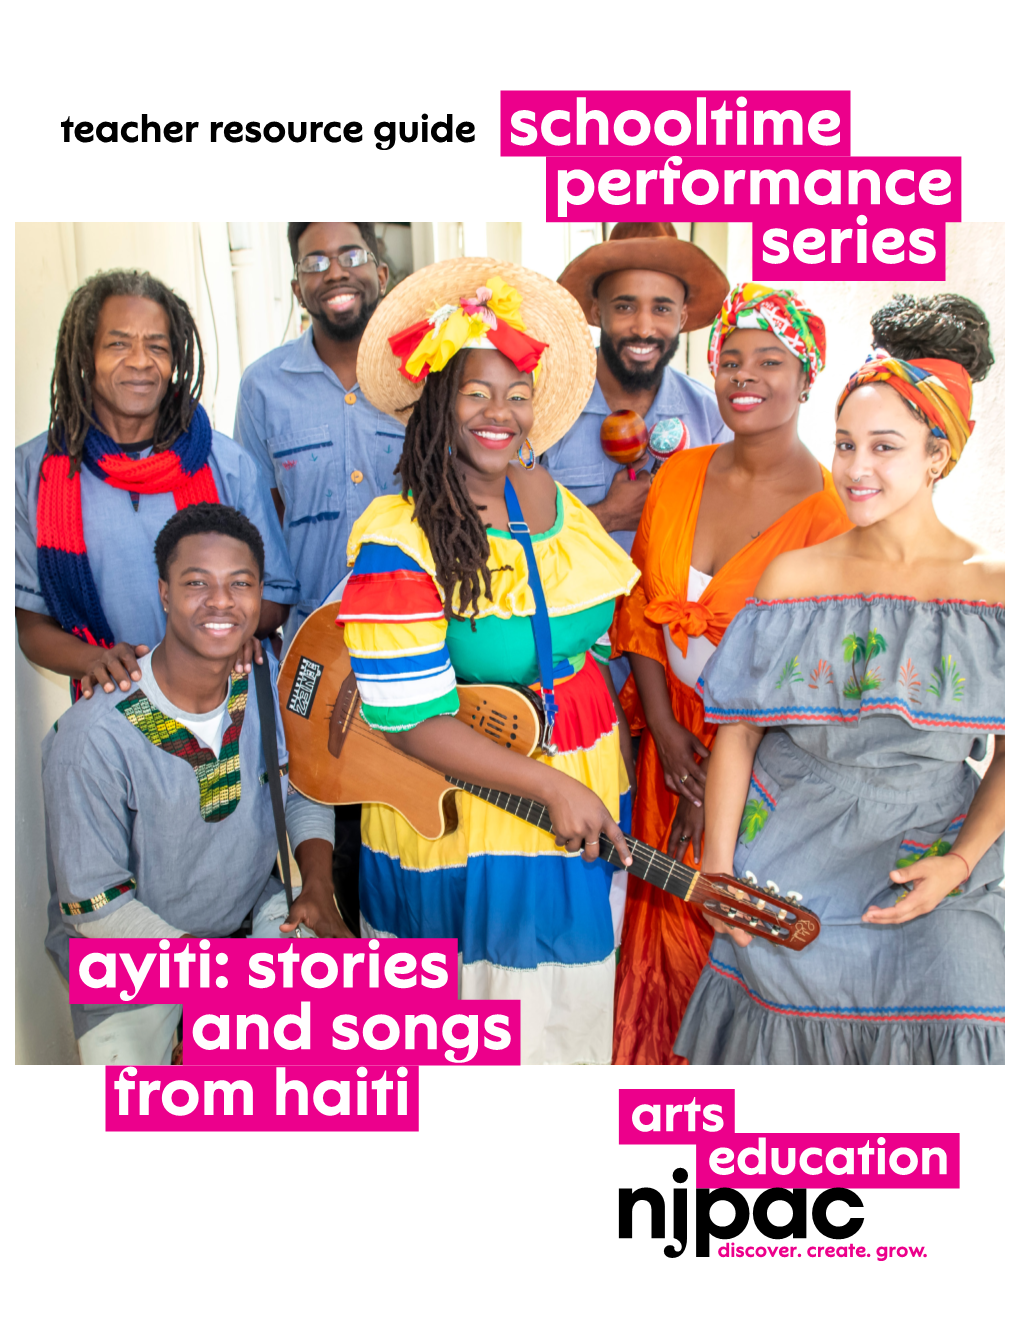 Ayiti: Stories & Songs from Haiti Resource Guide